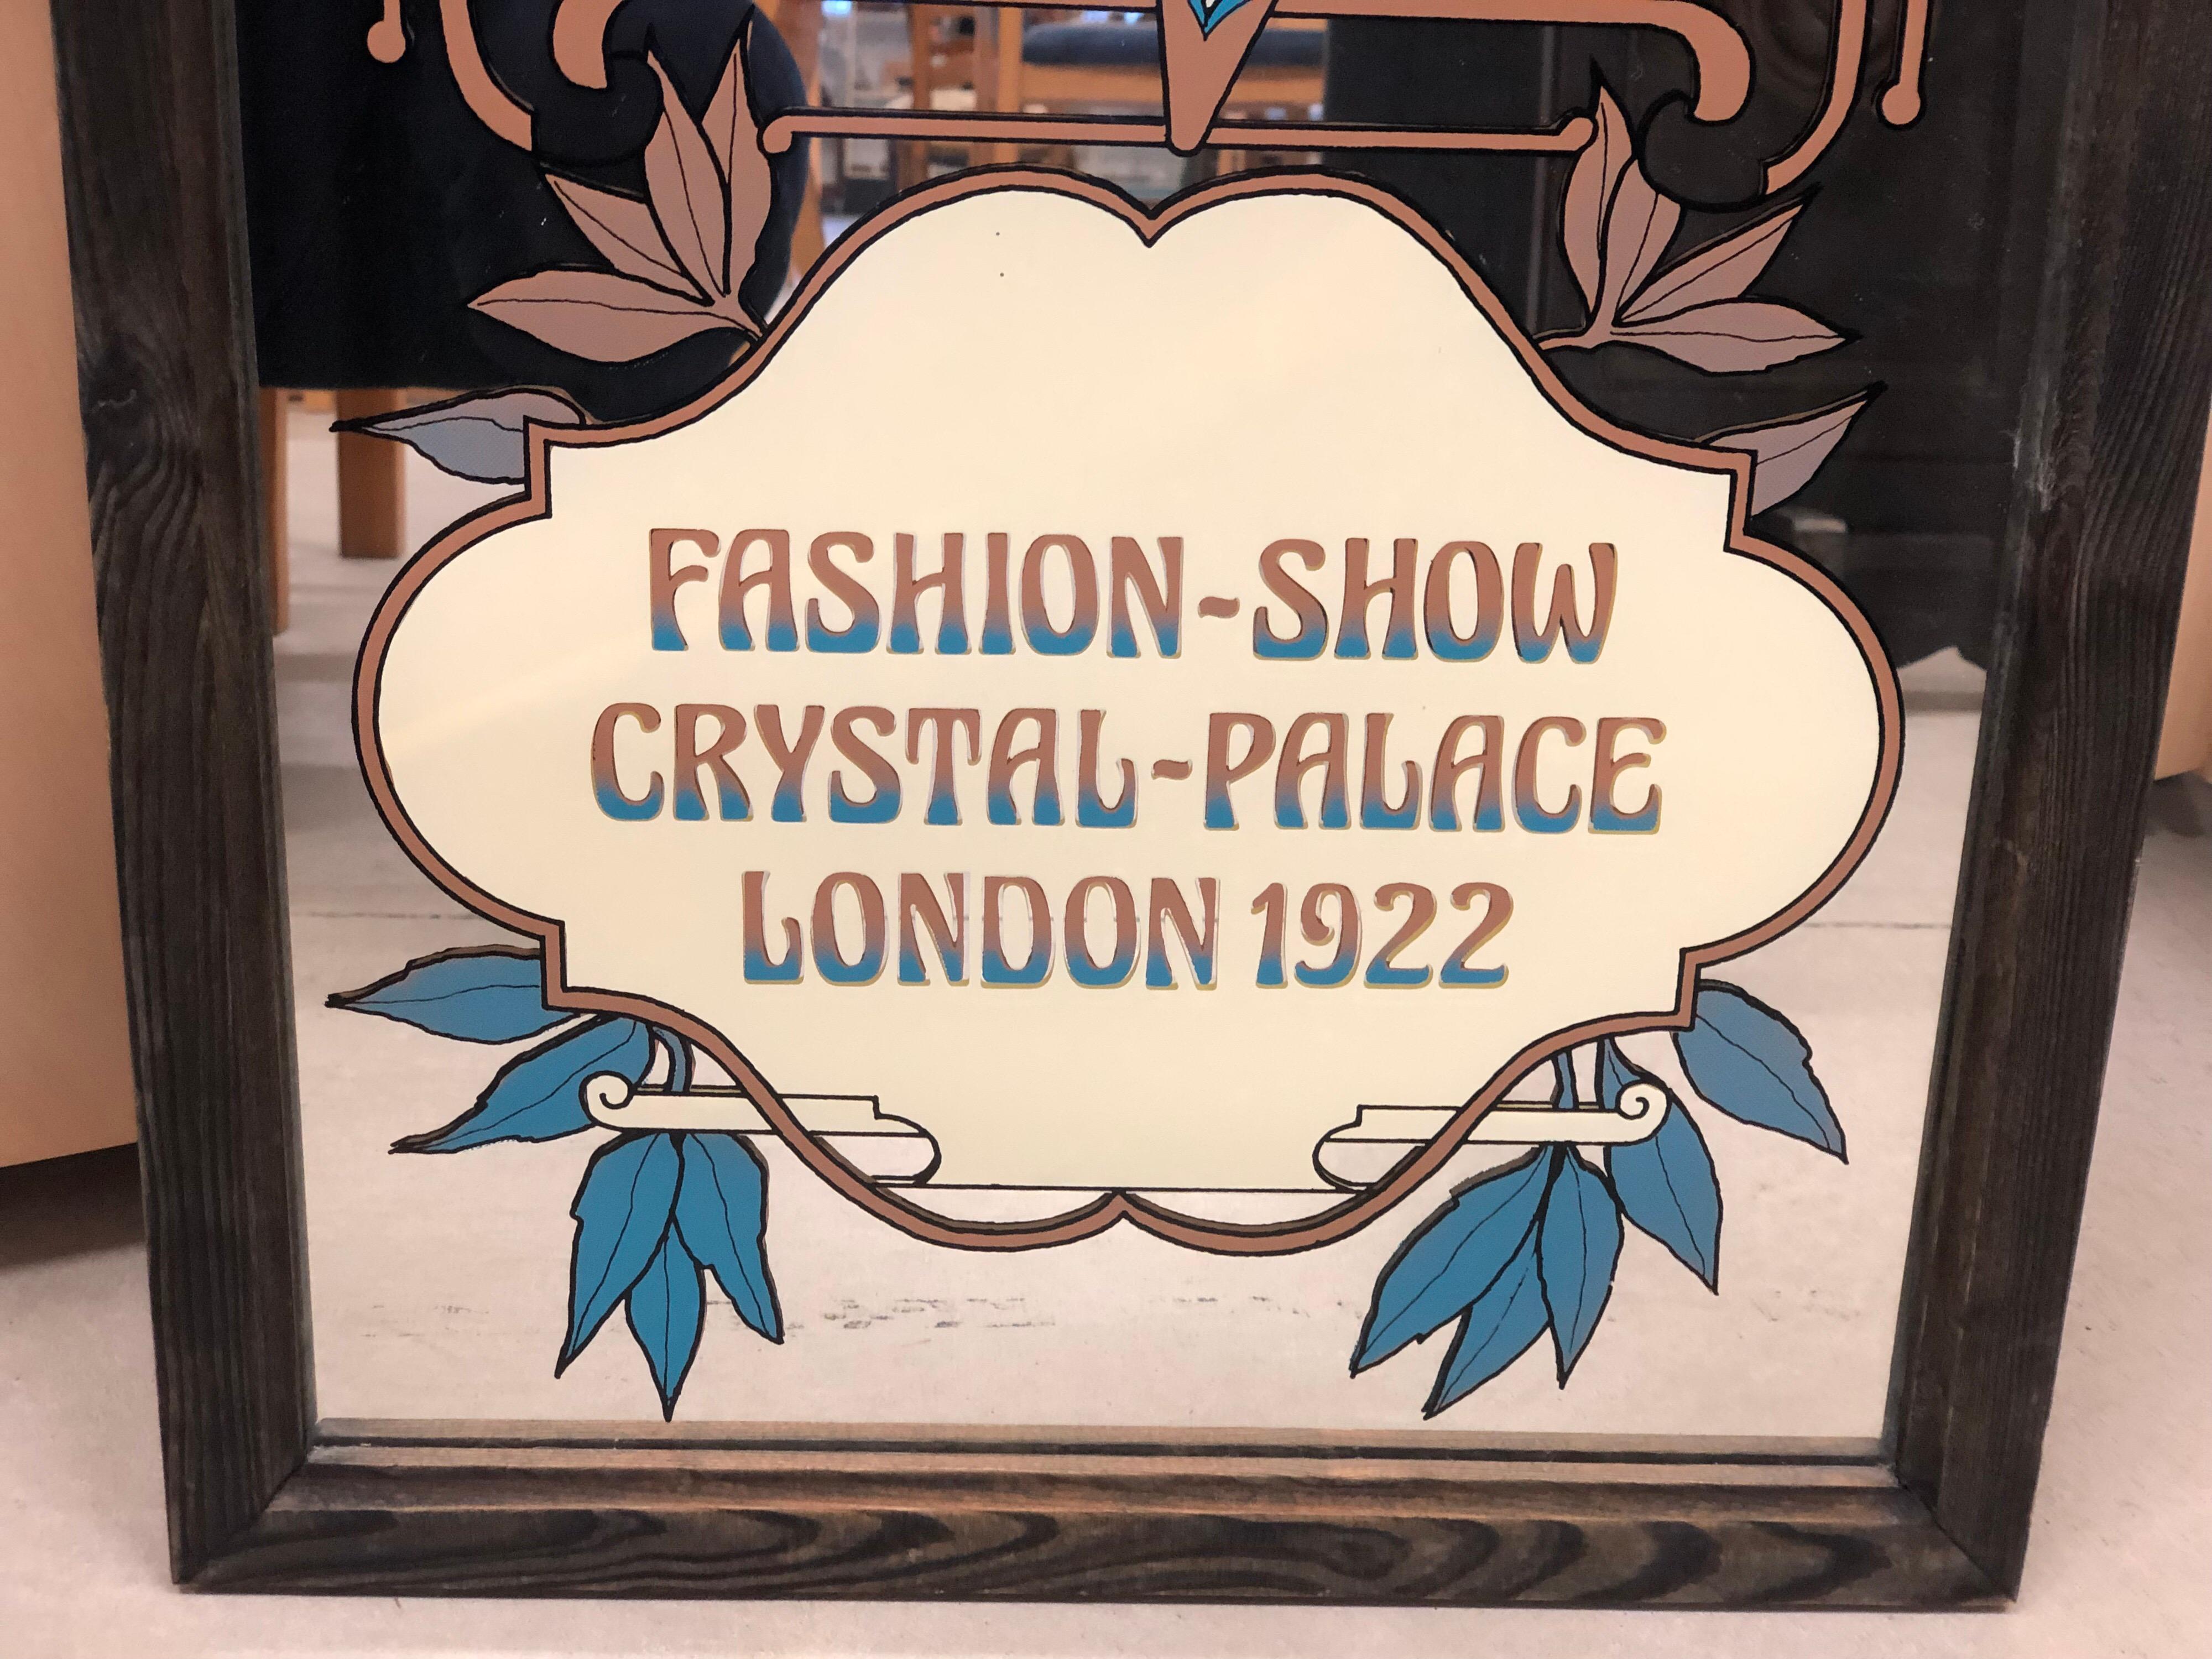 Art nouveau-Spiegel-Mode-Show Kristall-Palace London 1922 (Moderne der Mitte des Jahrhunderts)